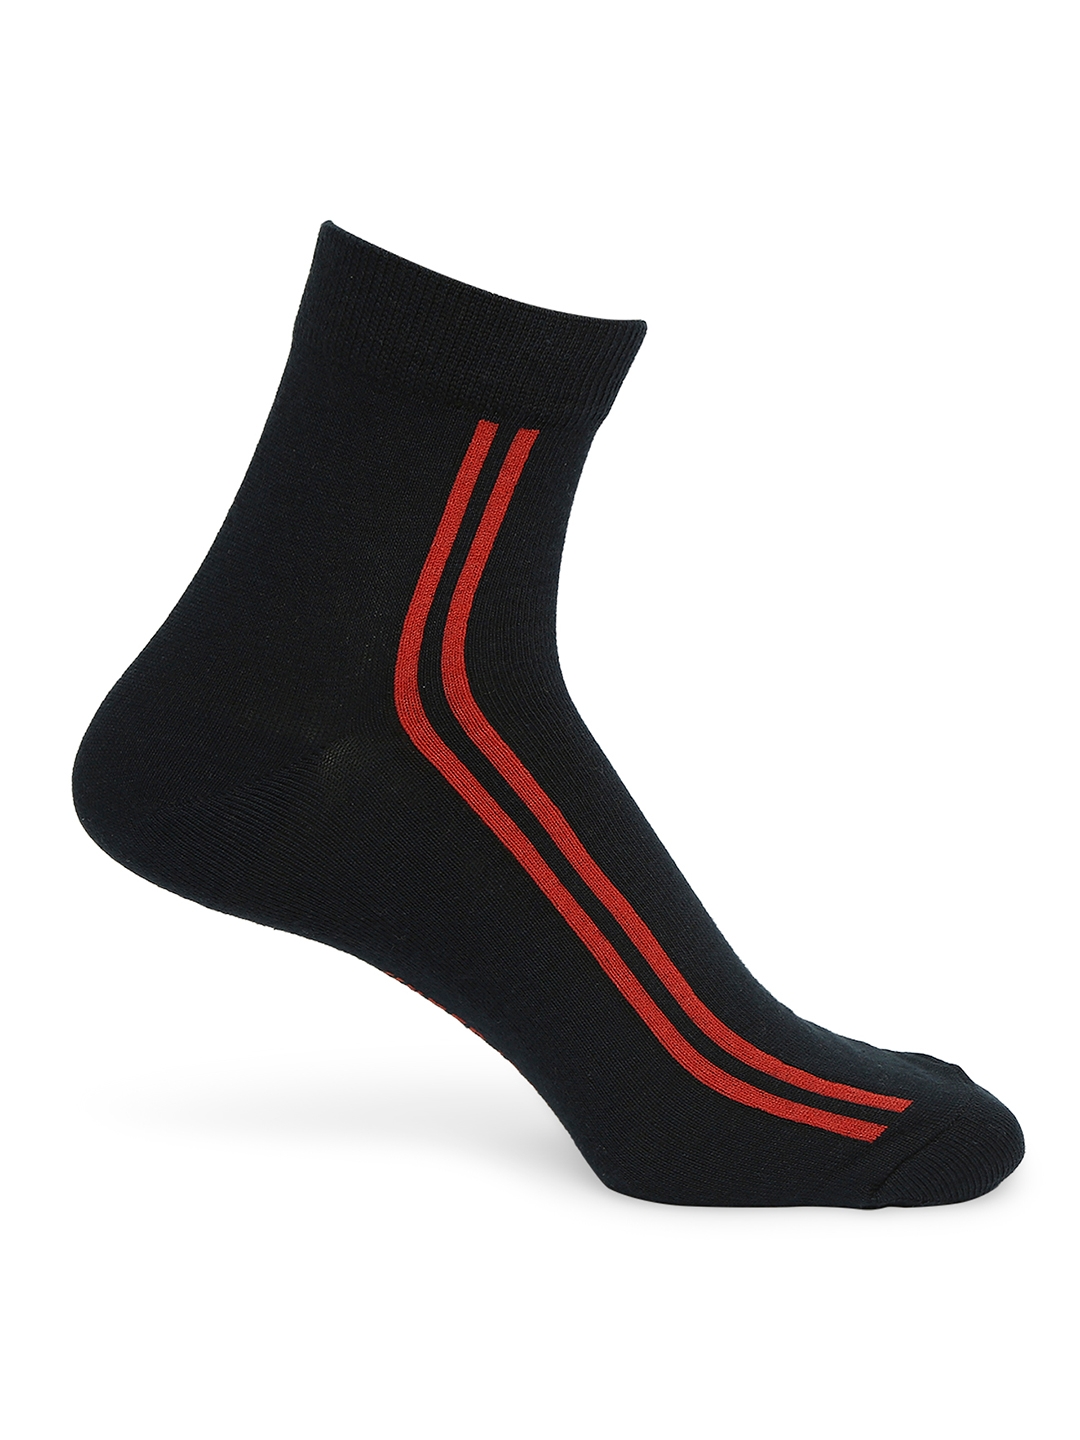 spykar | Underjeans by Spykar Premium Navy & Grey Melange Ankle Length Socks - Pack Of 2 2